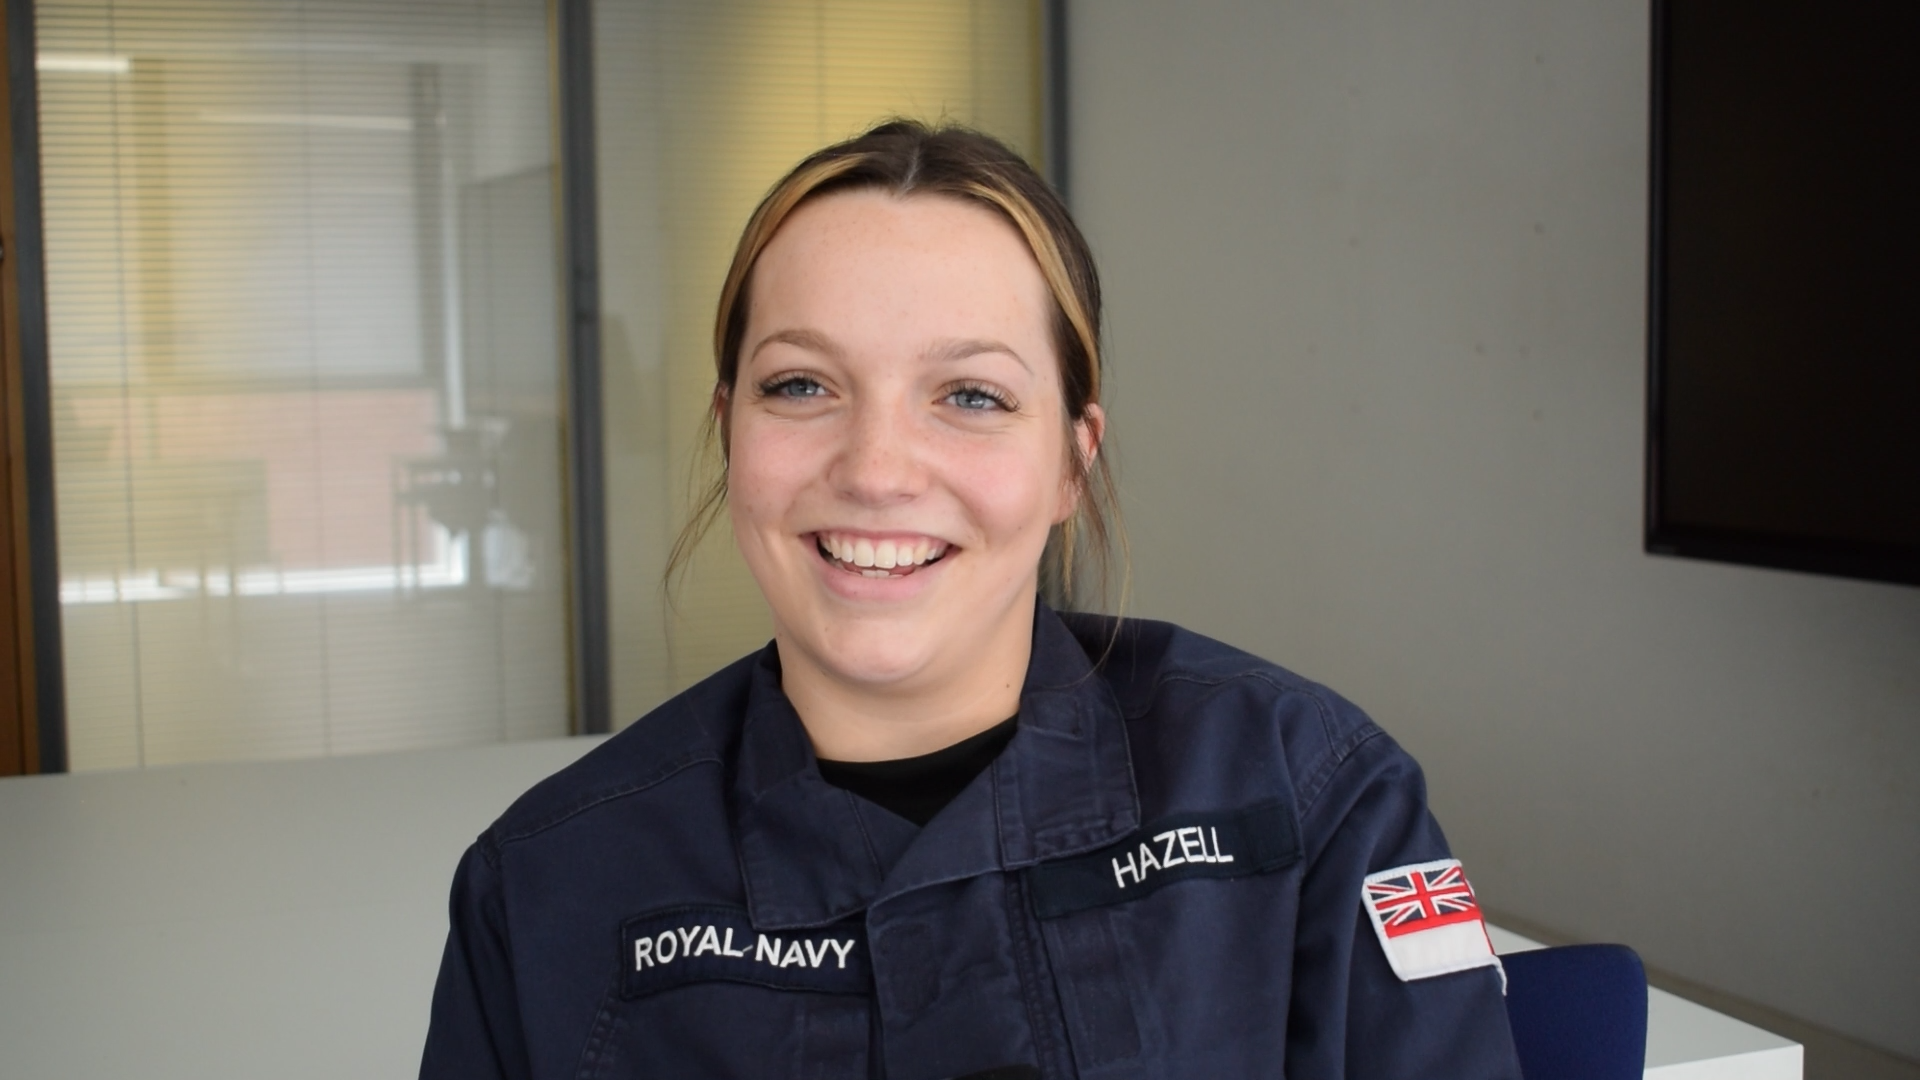 Tilly Hazell in her Royal Navy uniform